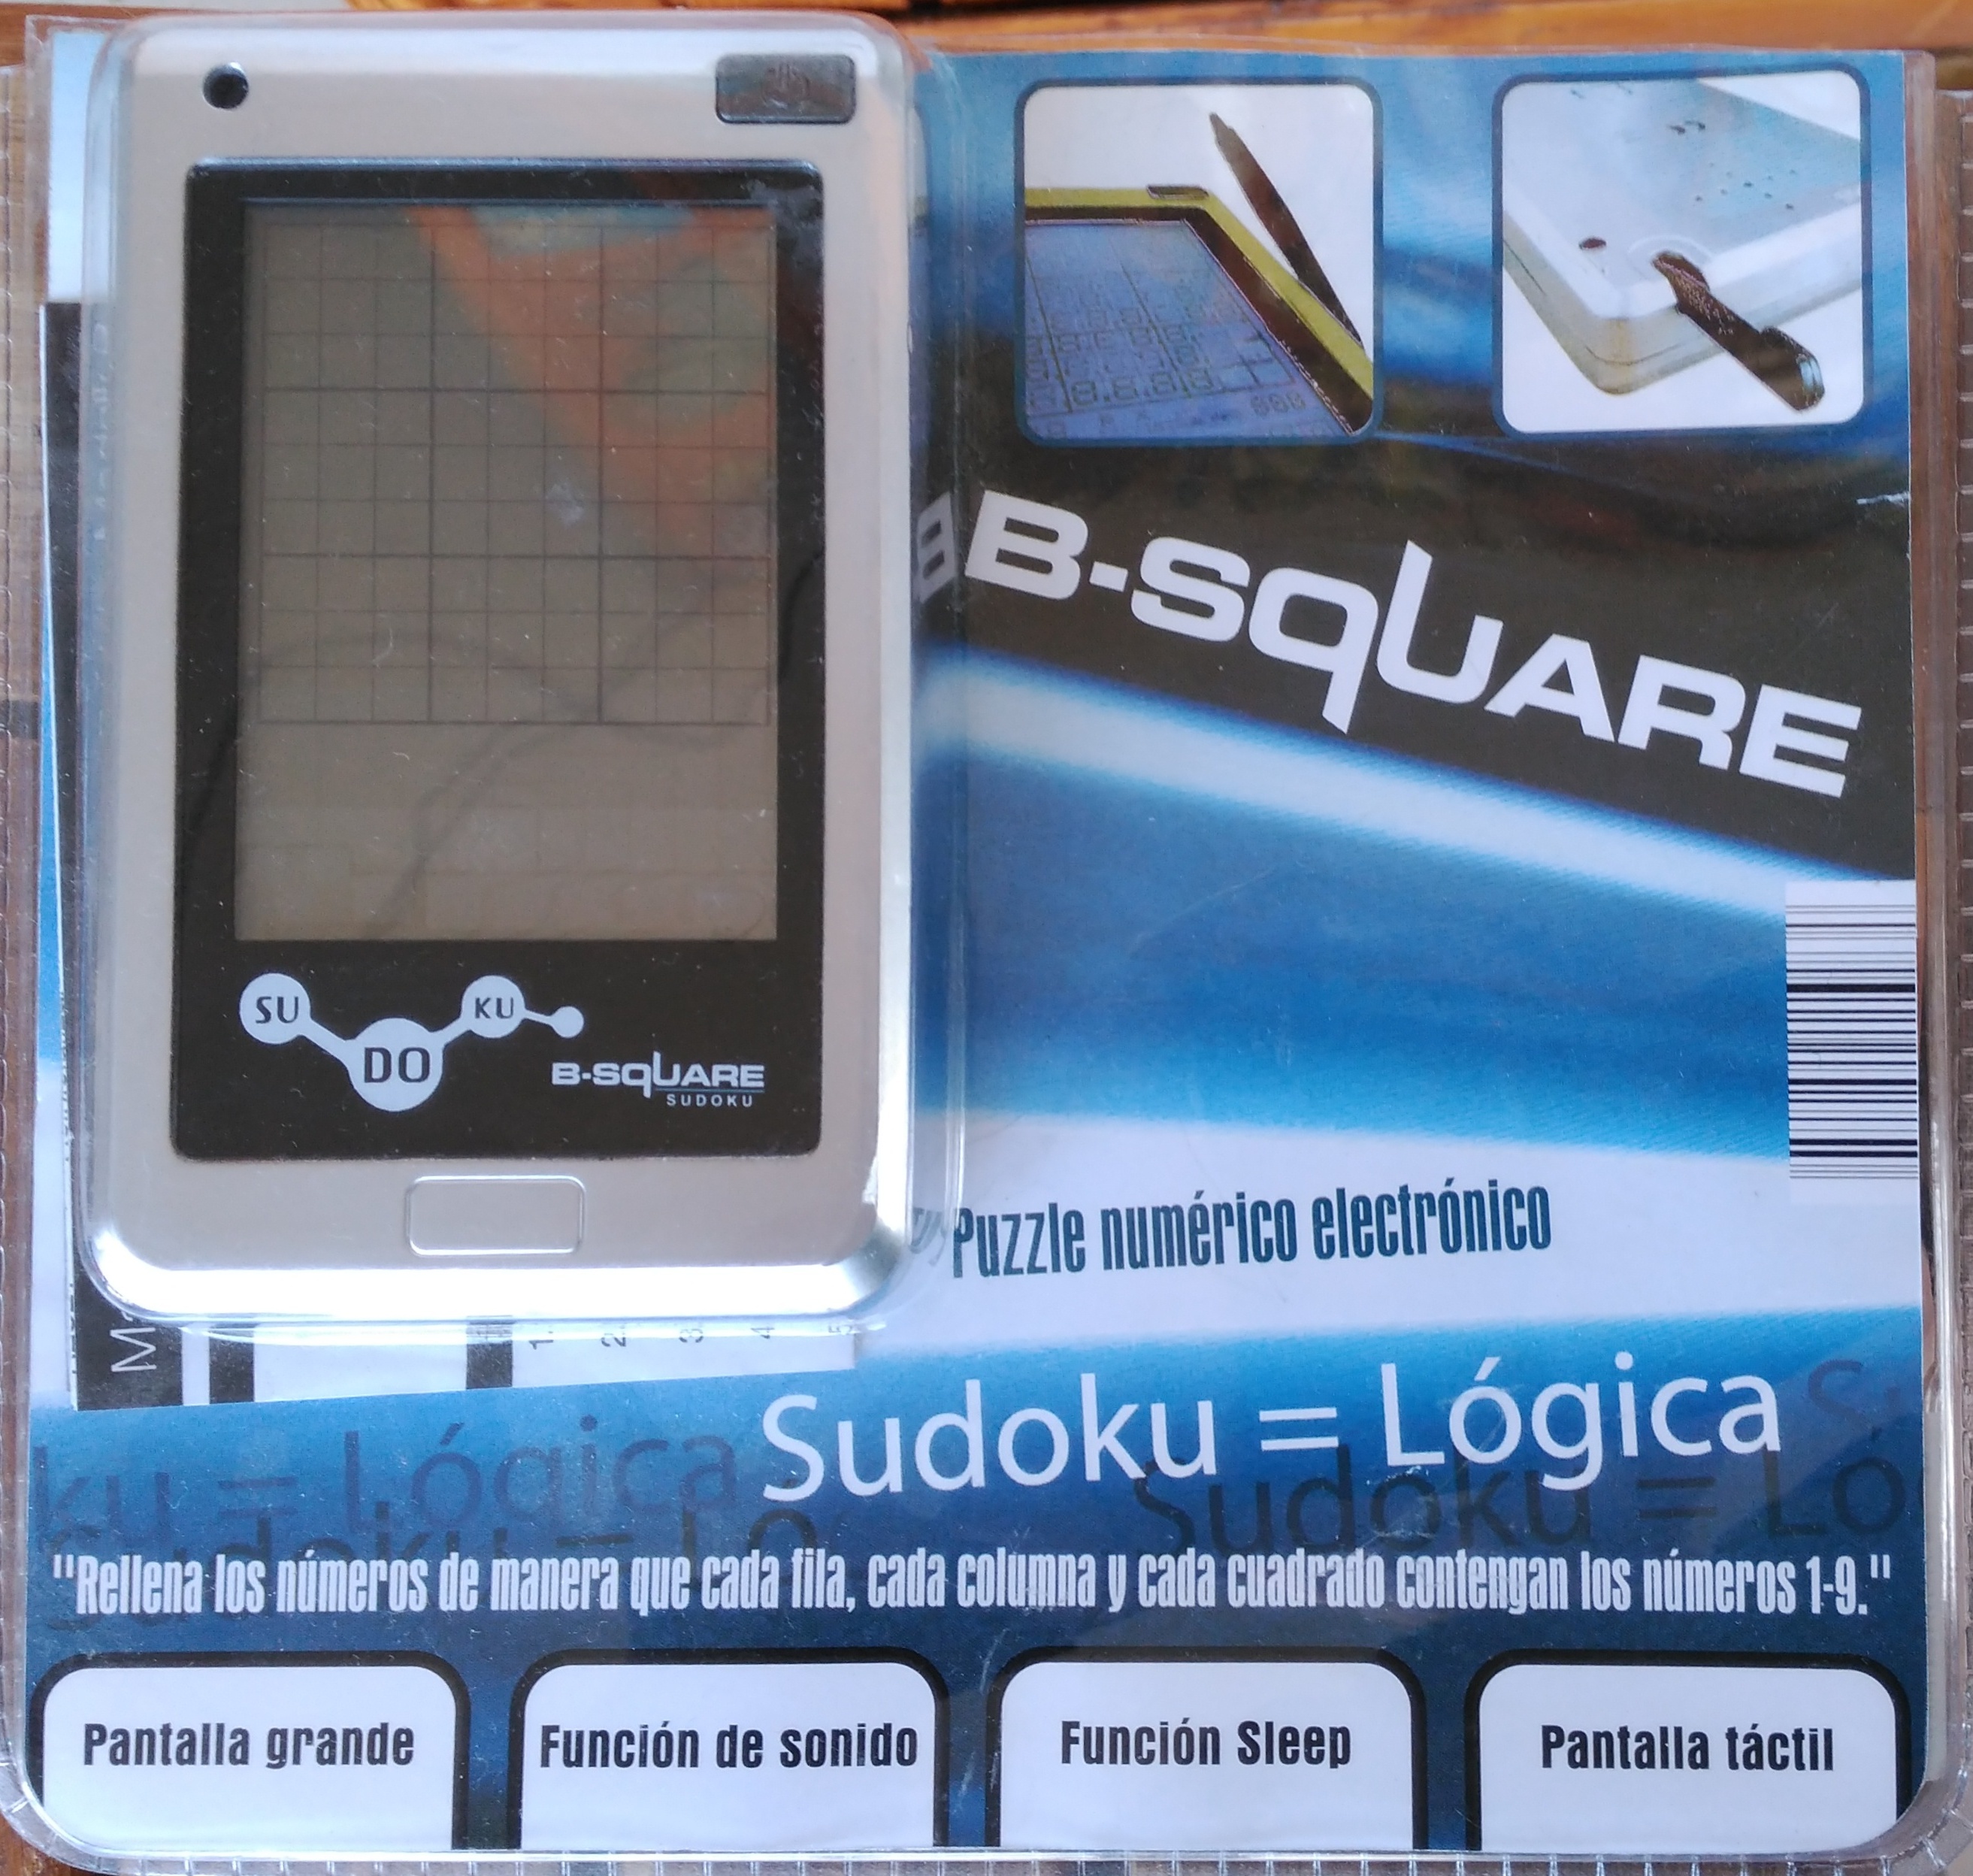 Ordenadores Orty: Sudoku B-square (modelo B-square S 100)